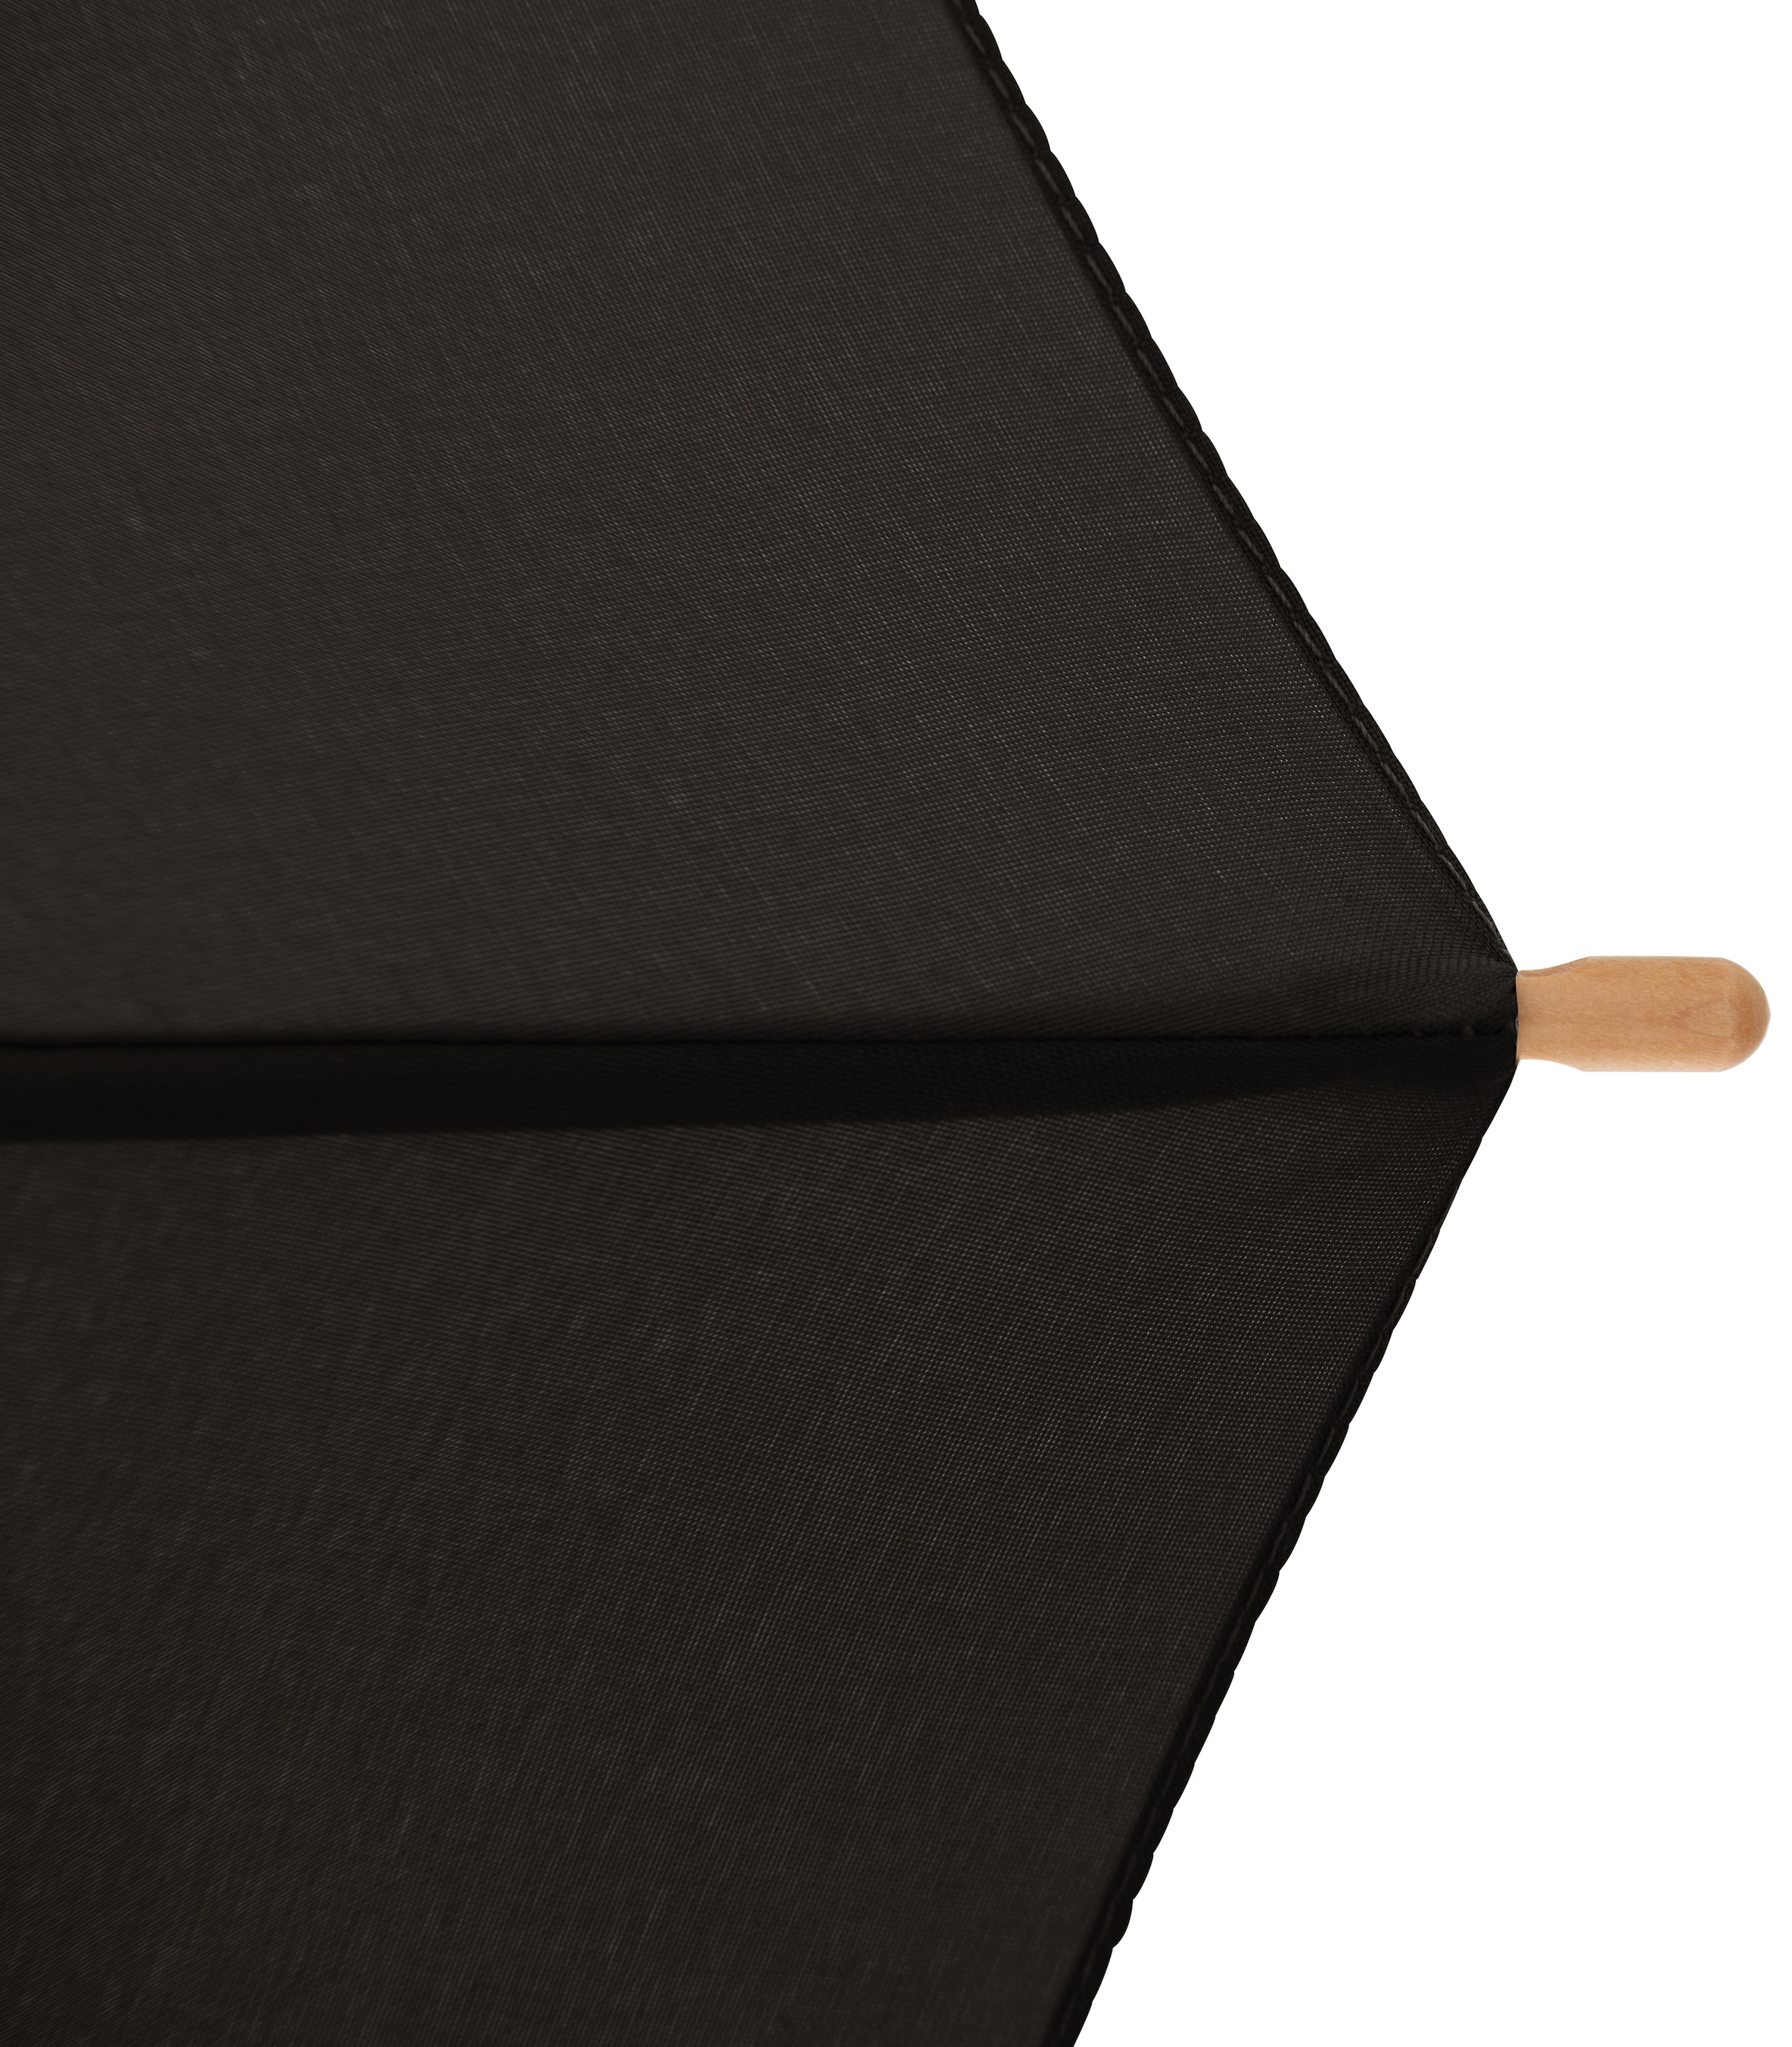 doppler® Stockregenschirm mit aus BAUR Material Long, black«, recyceltem aus | Holz simple Schirmgriff kaufen »nature